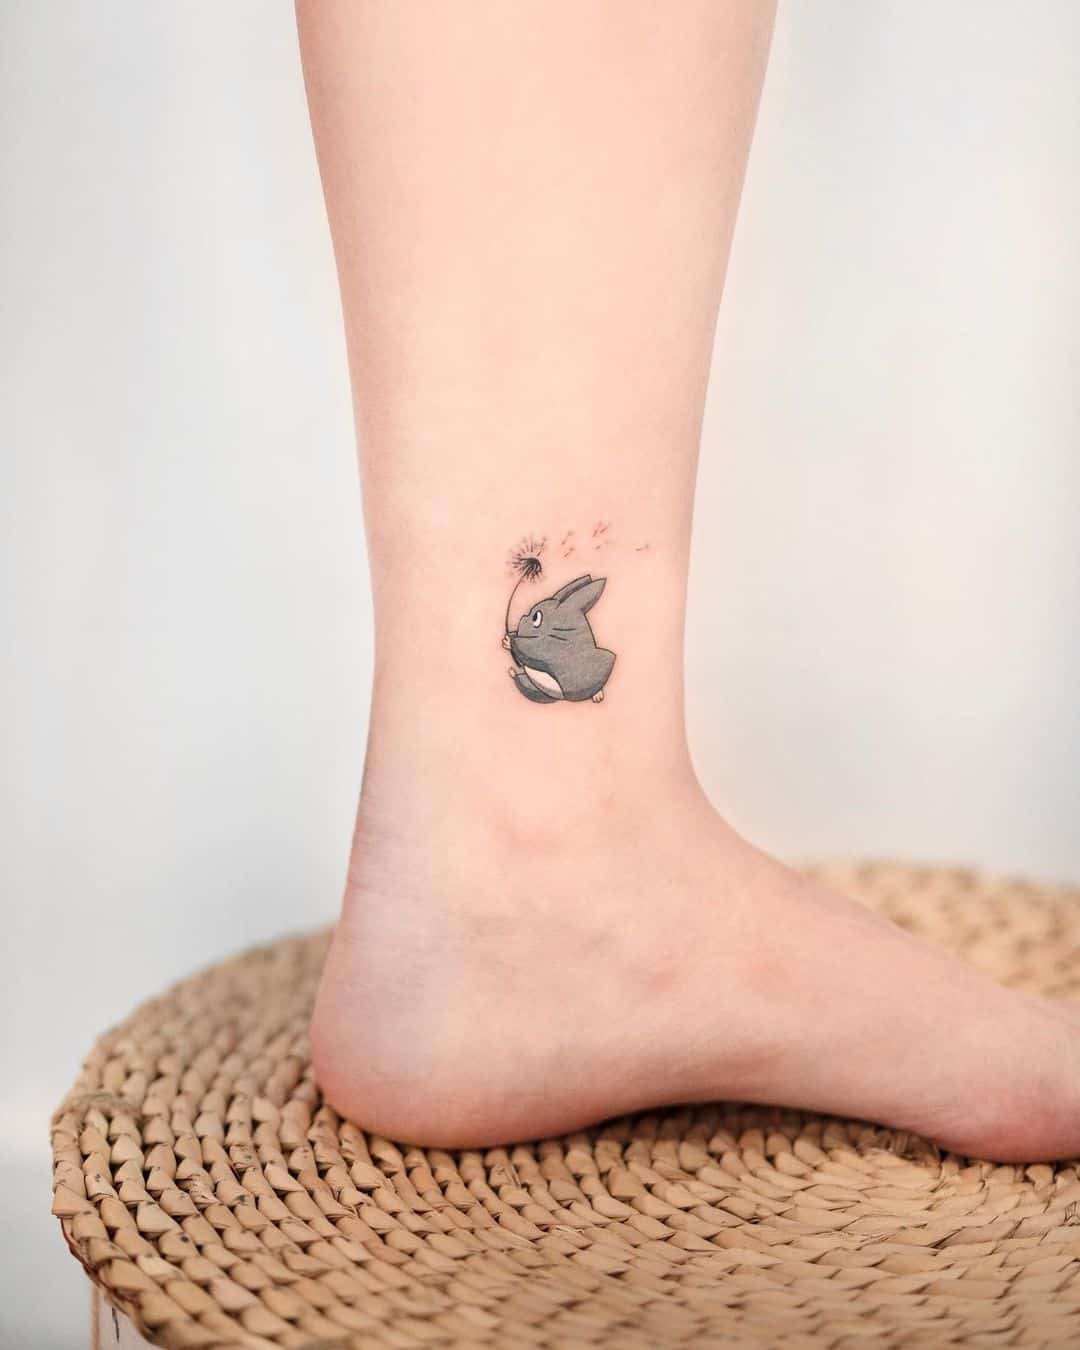 Dandelion tattoo by tattooist toma